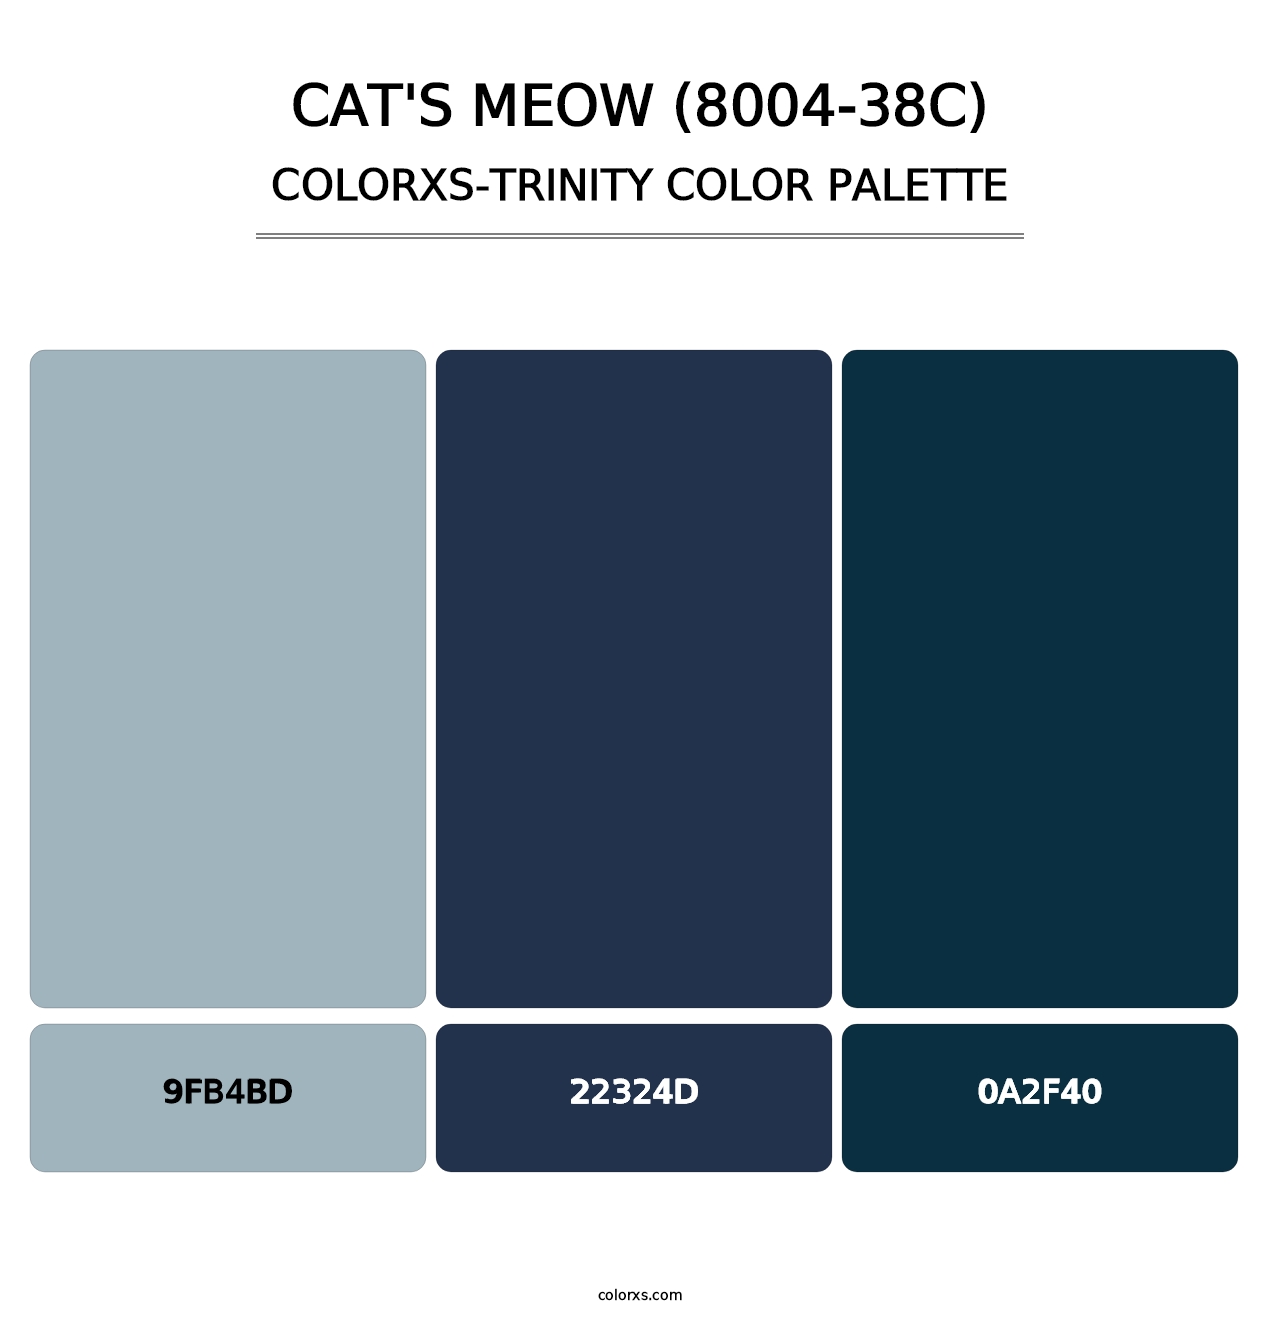 Cat's Meow (8004-38C) - Colorxs Trinity Palette